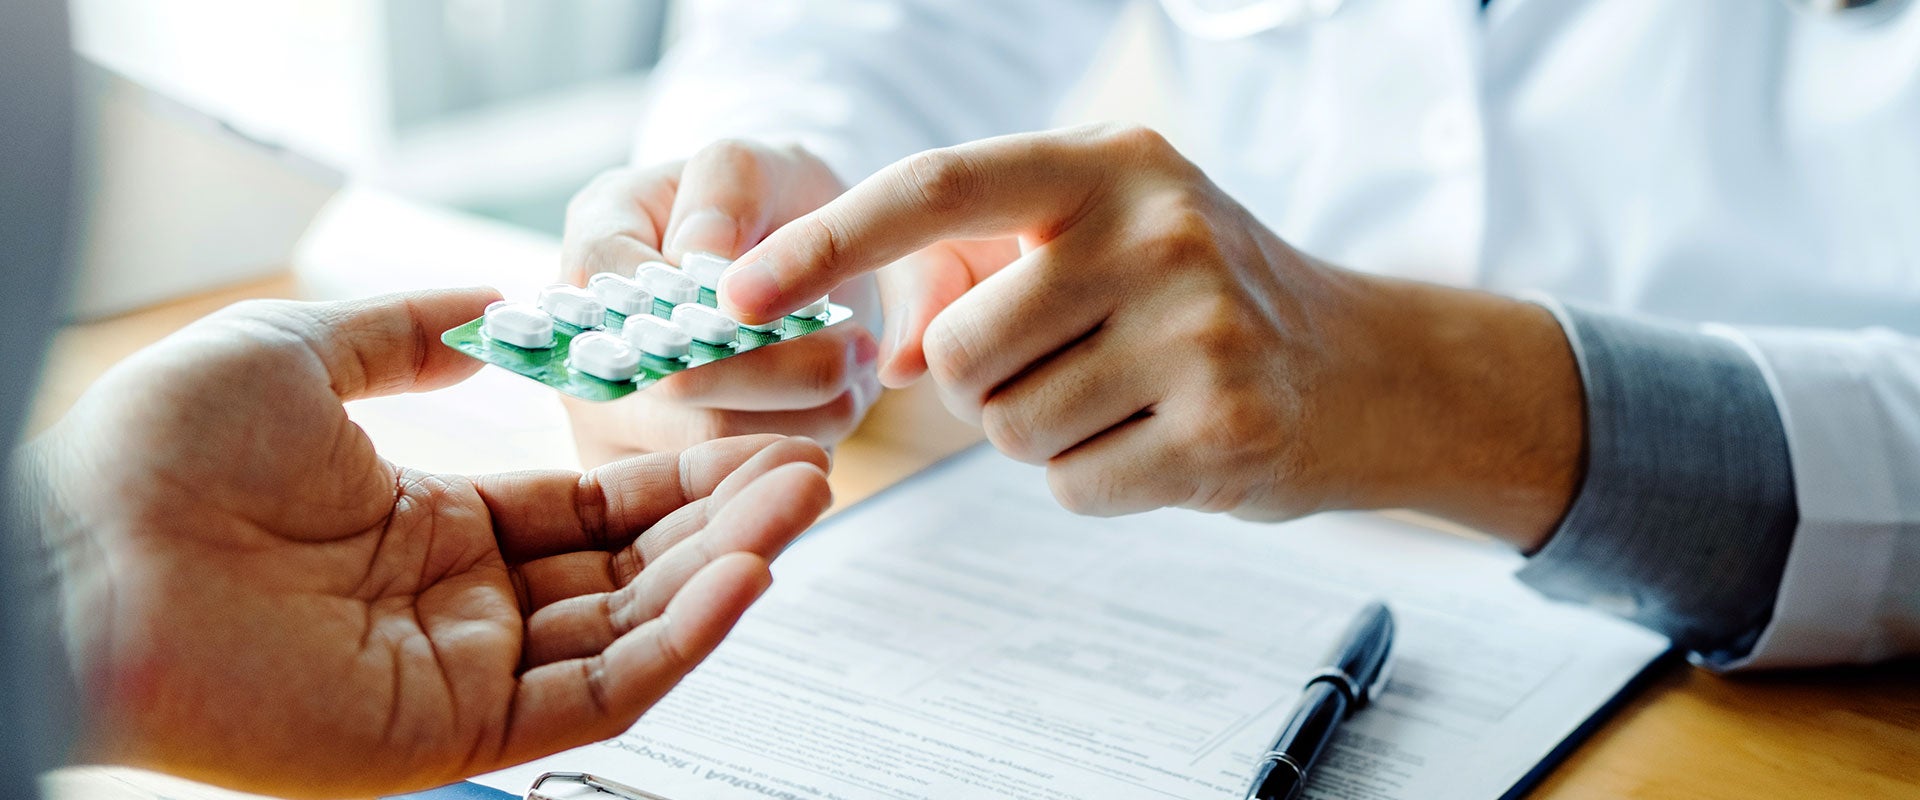 pharmacists holding pills